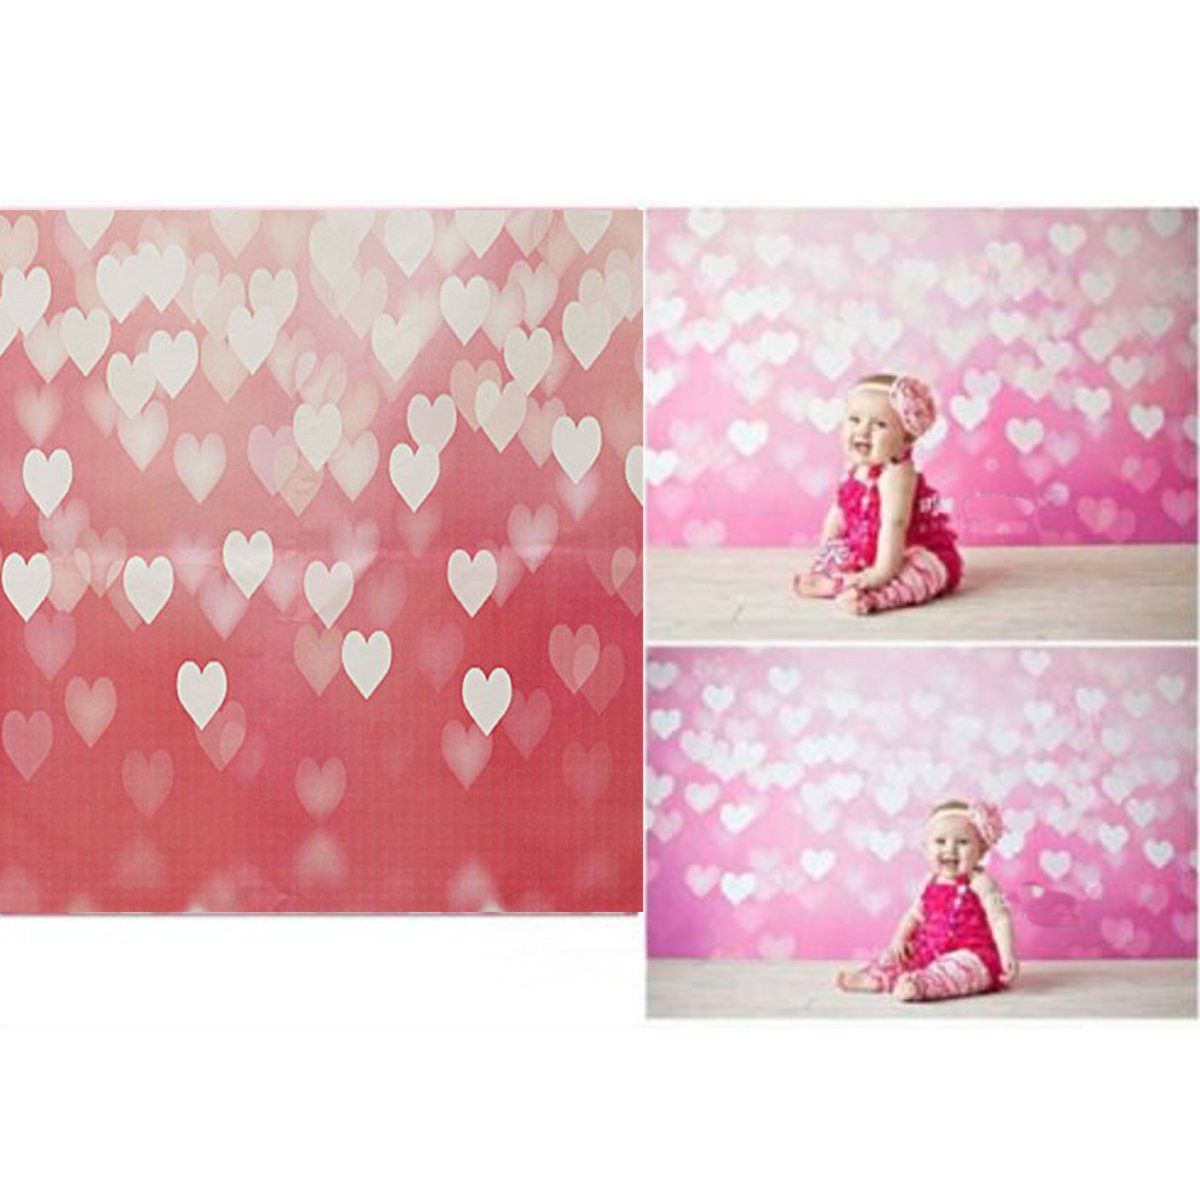 3x5ft-Vinyl-Heart-Birthday-Weeding-Photography-Studio-Backdrop-Photo-Background-props-1115388